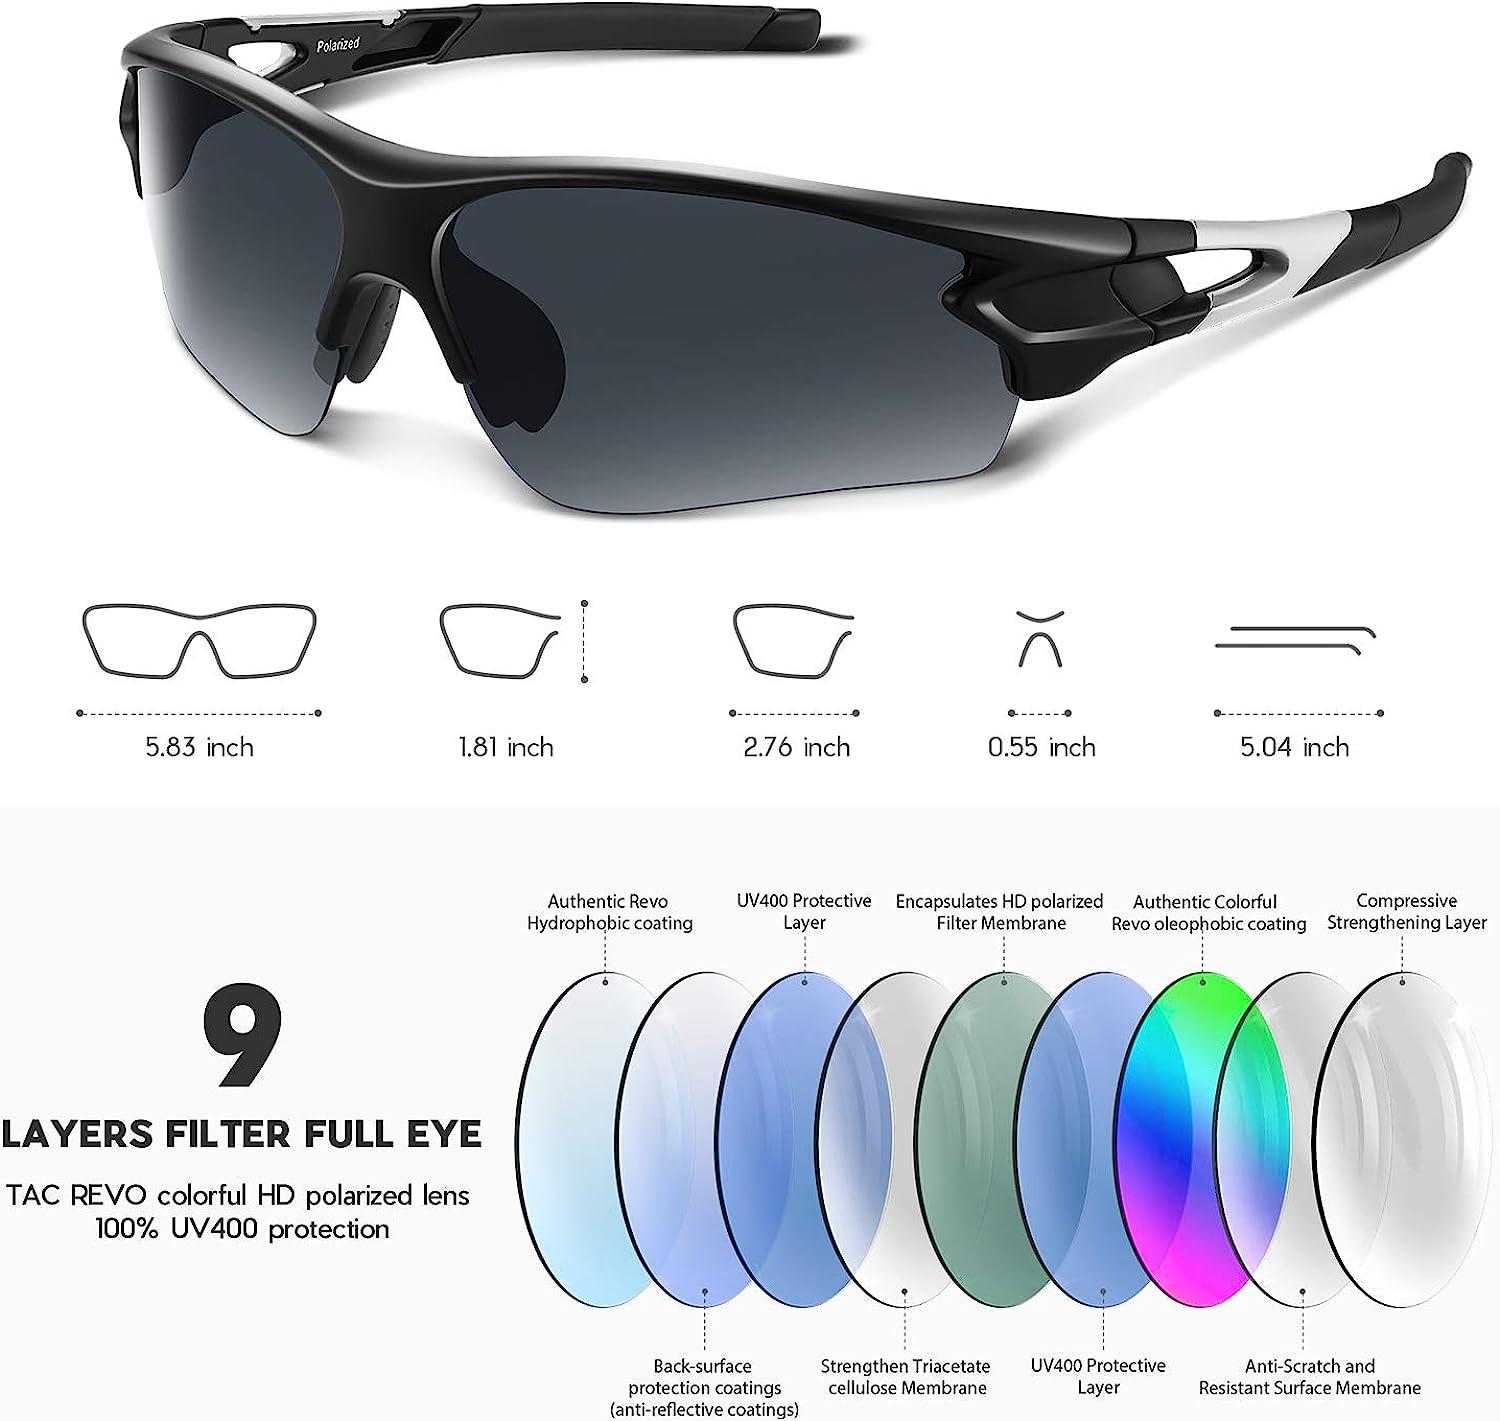 Bea CooL Polarized Sports Sunglasses for Men Women Youth Baseball Fishing  Cycling Running Golf Motorcycle Tac Glasses UV400 Matte Black